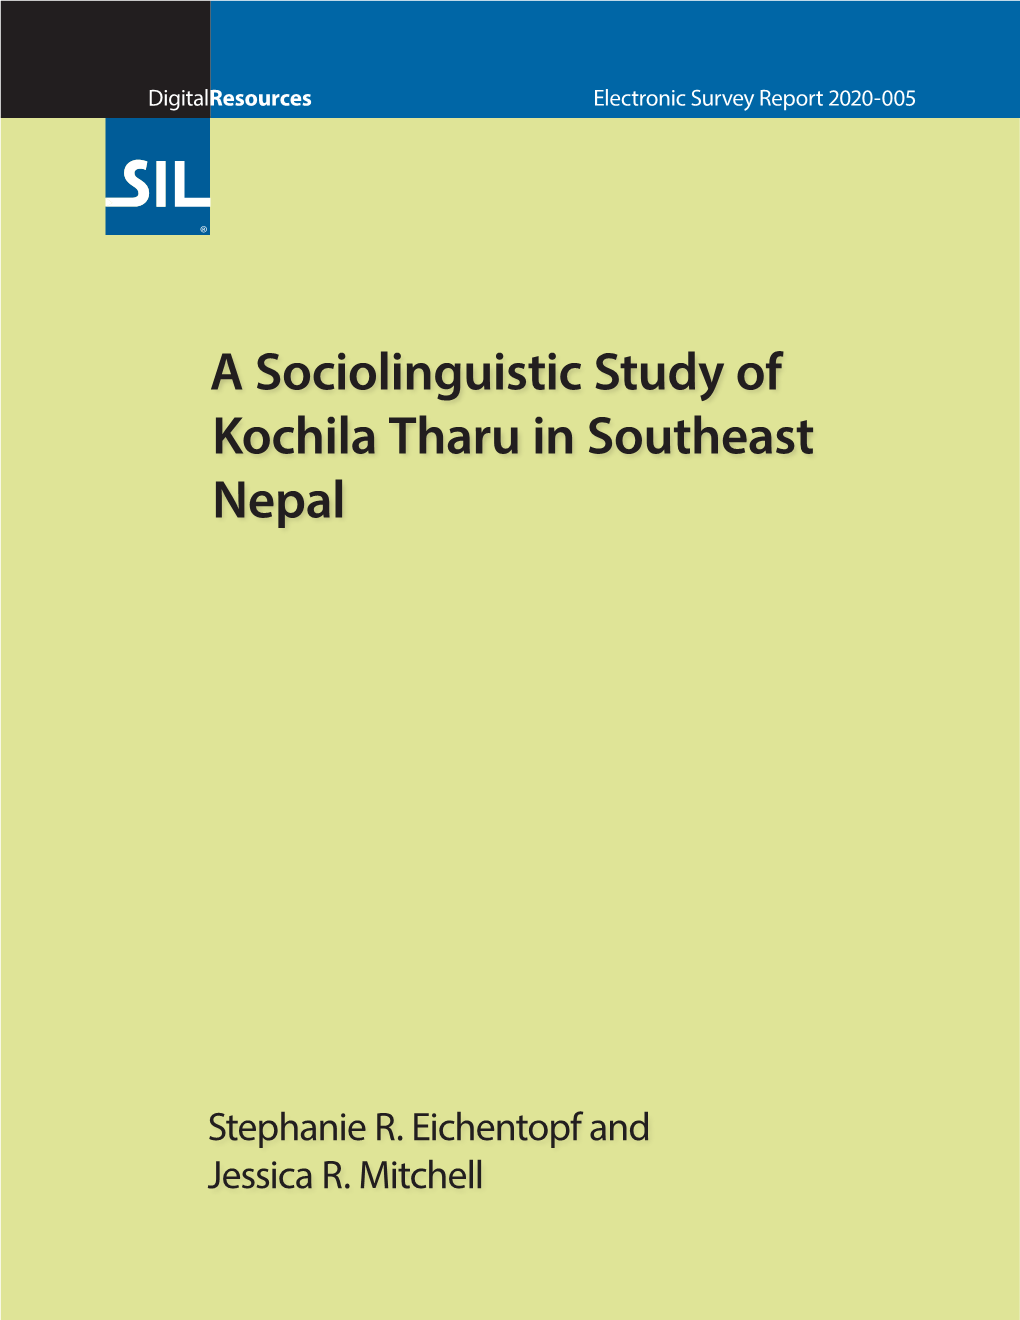 A Sociolinguistic Study of Kochila Tharu in Southeast Nepal